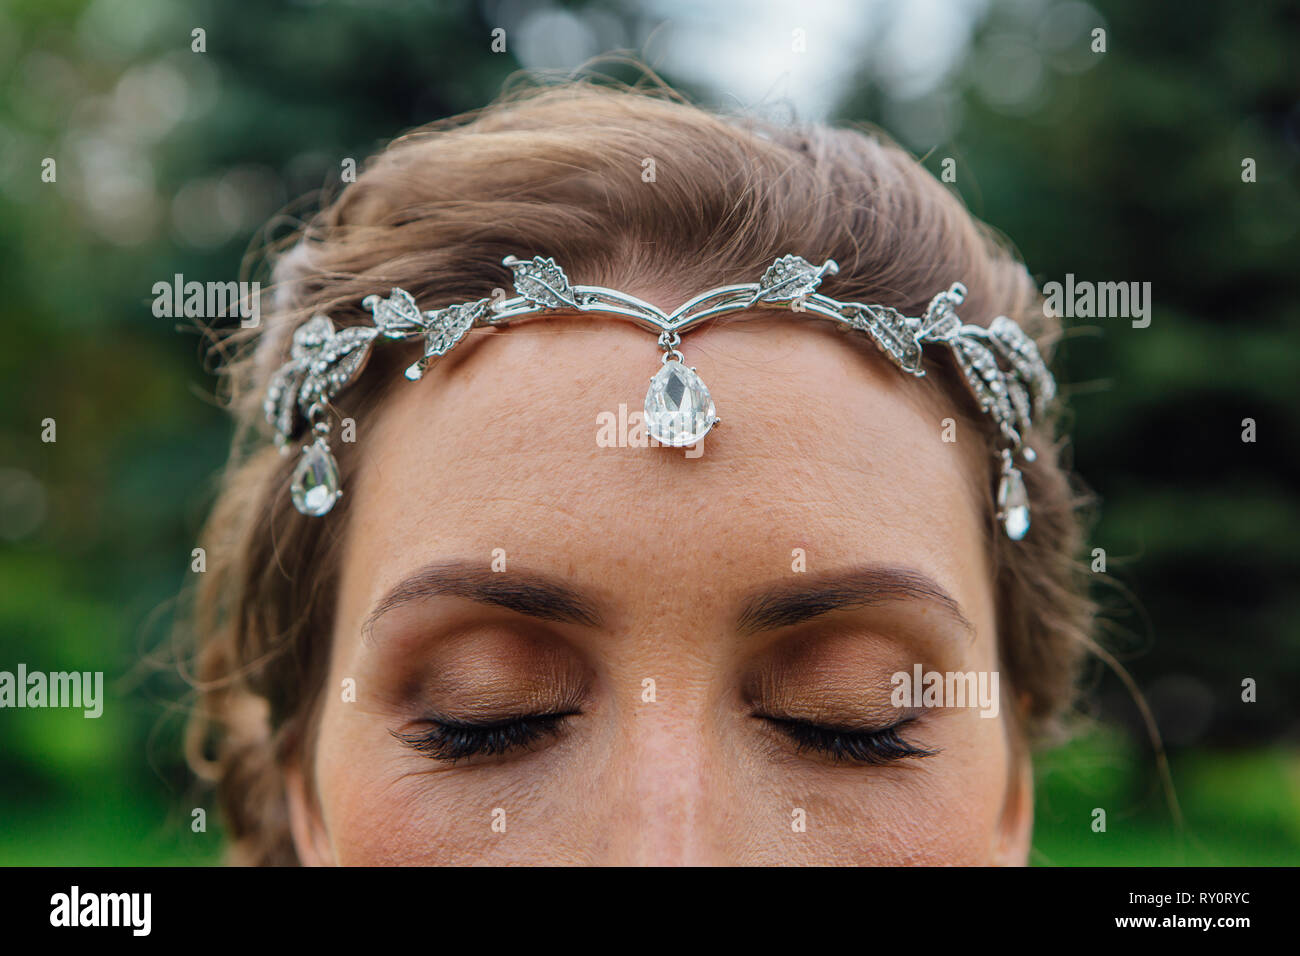 Diadem on the head of the bride Stock Photo - Alamy